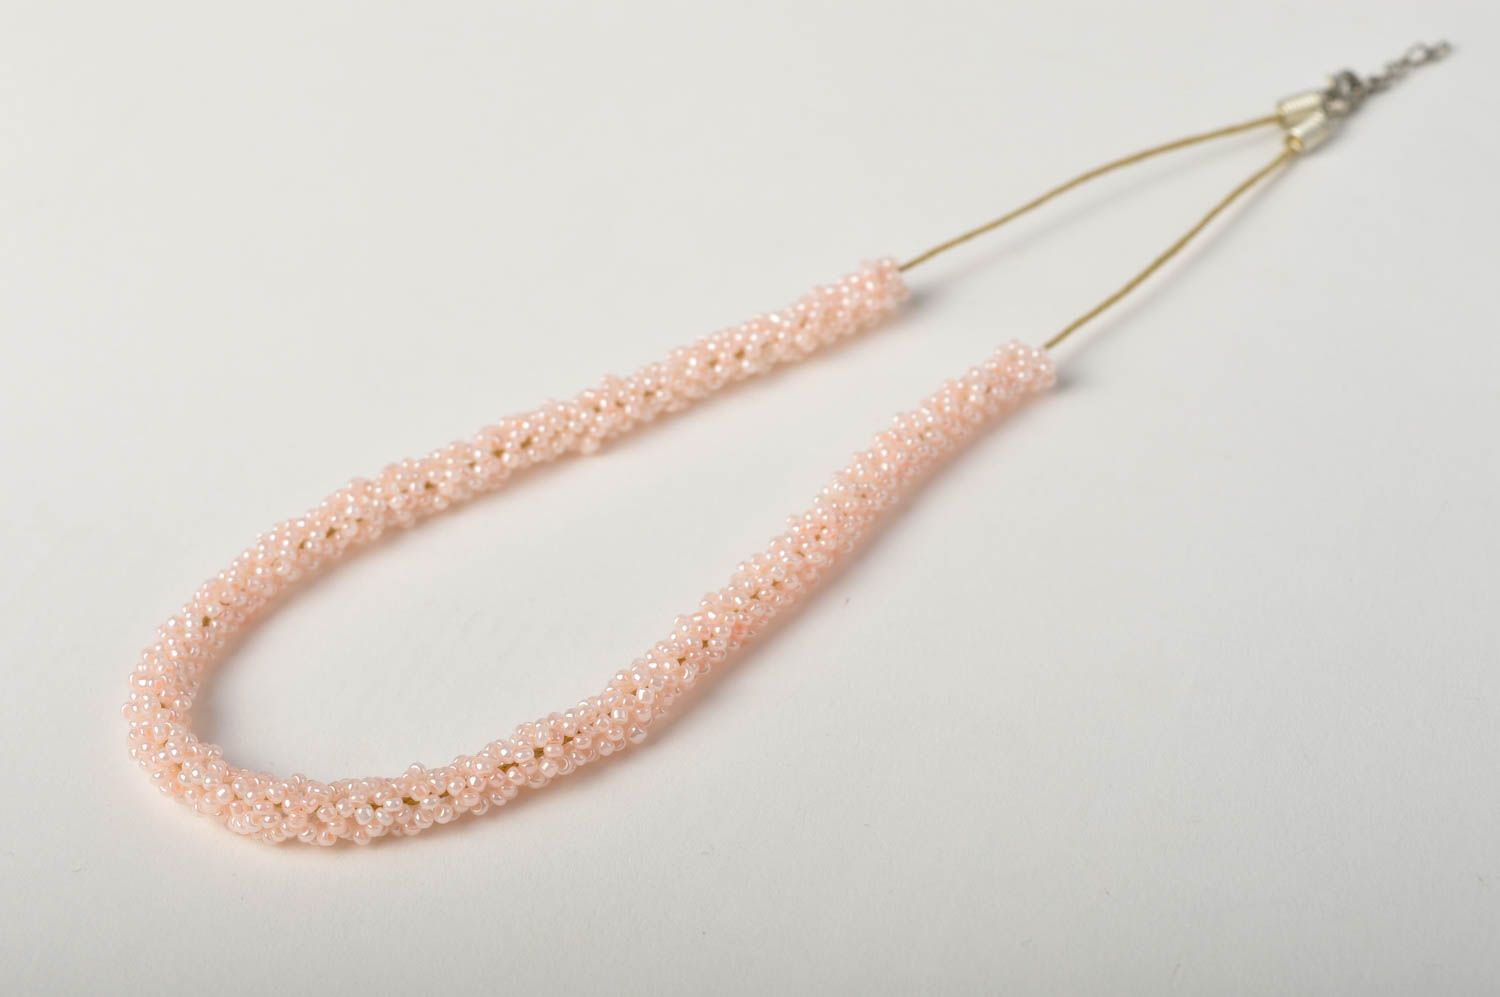 Festive handmade beaded necklace beaded cord necklace bead weaving gift ideas photo 2